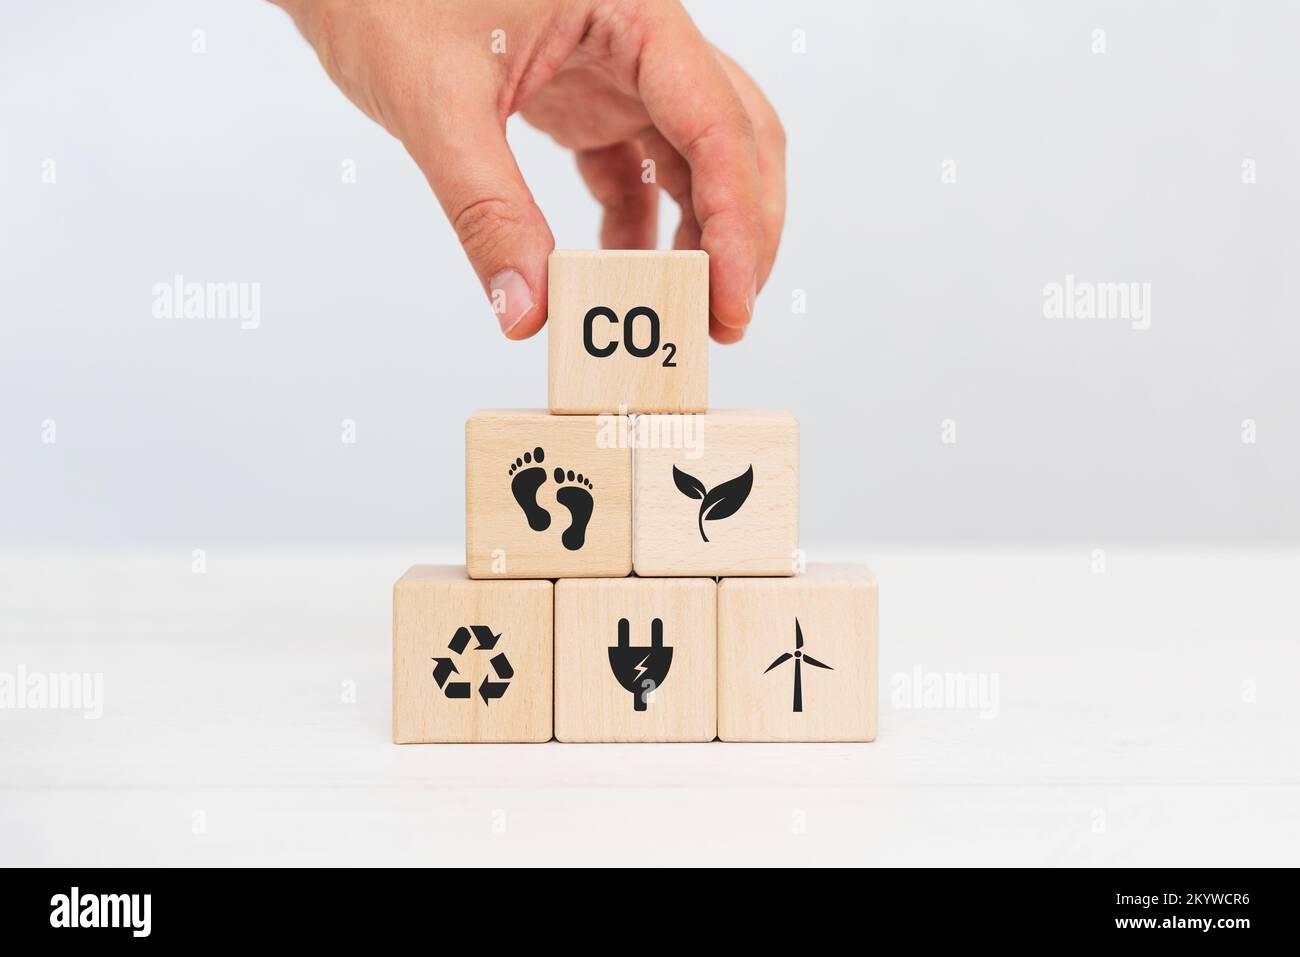 Dióxido de carbono, concepto de huella de carbono con bloques de madera Foto de stock